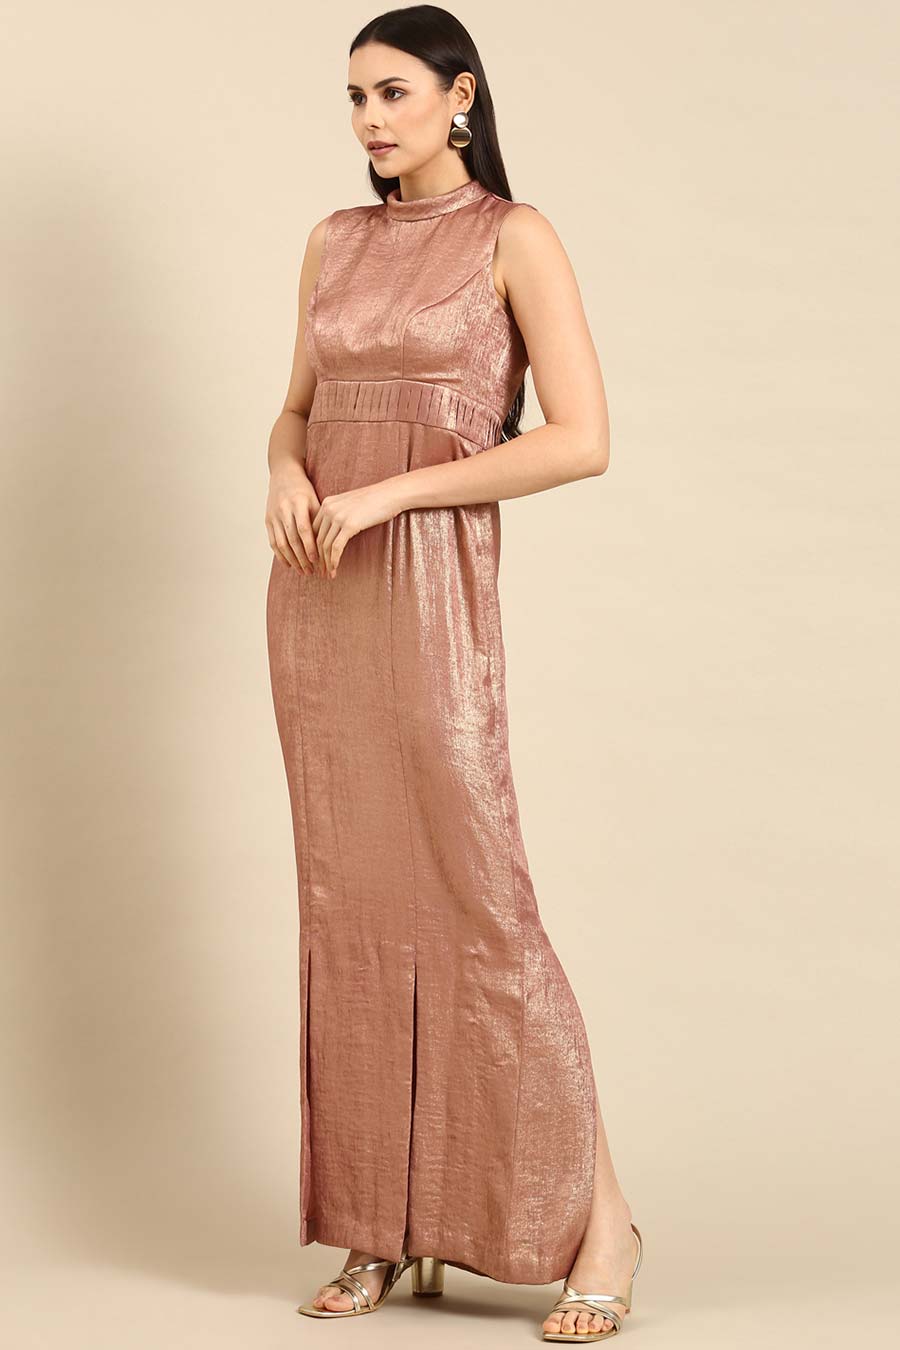 Pink Gold Foil Print Gown Dress